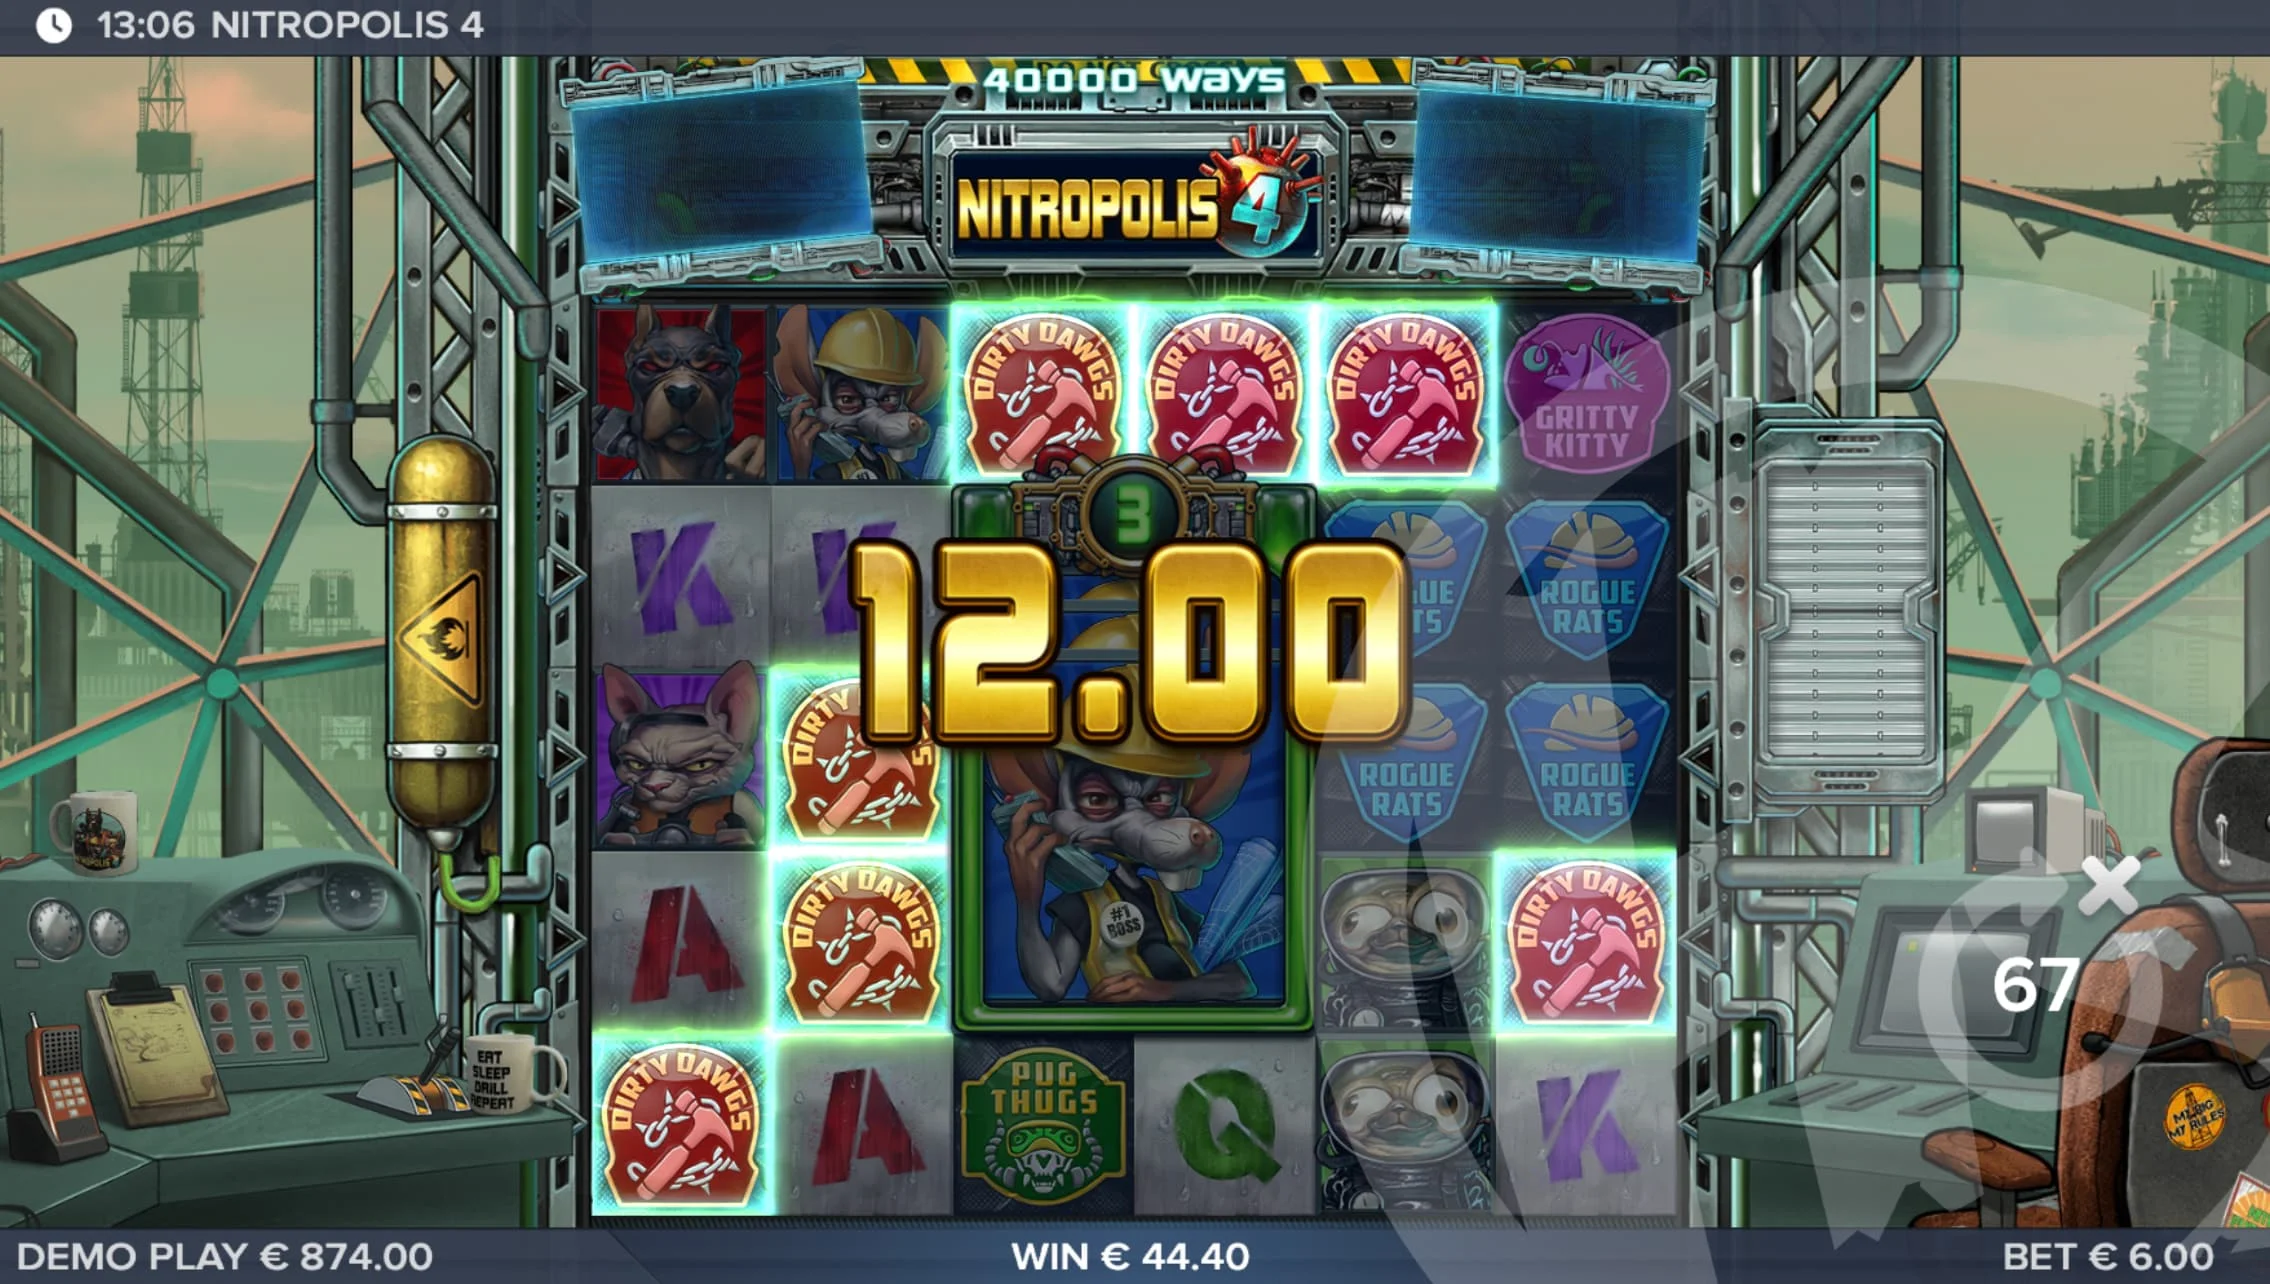 Nitropolis 4 Offers Players 4,096 Ways as Standard